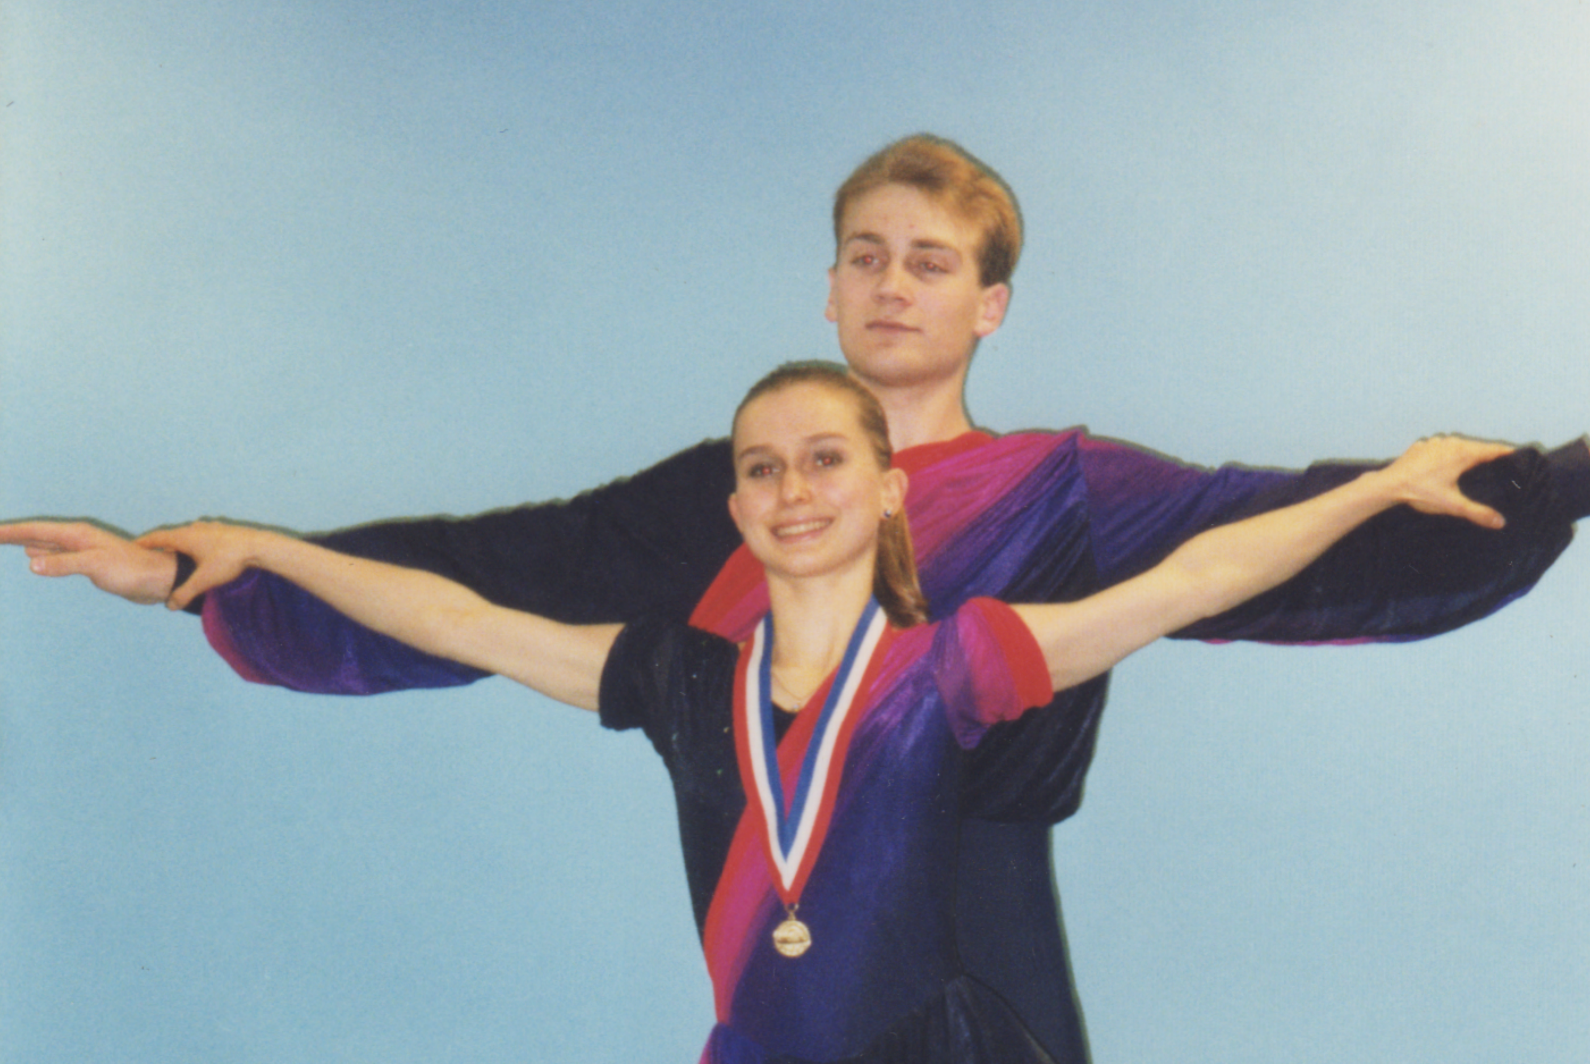 The author, Keri Blakinger, and her skating partner